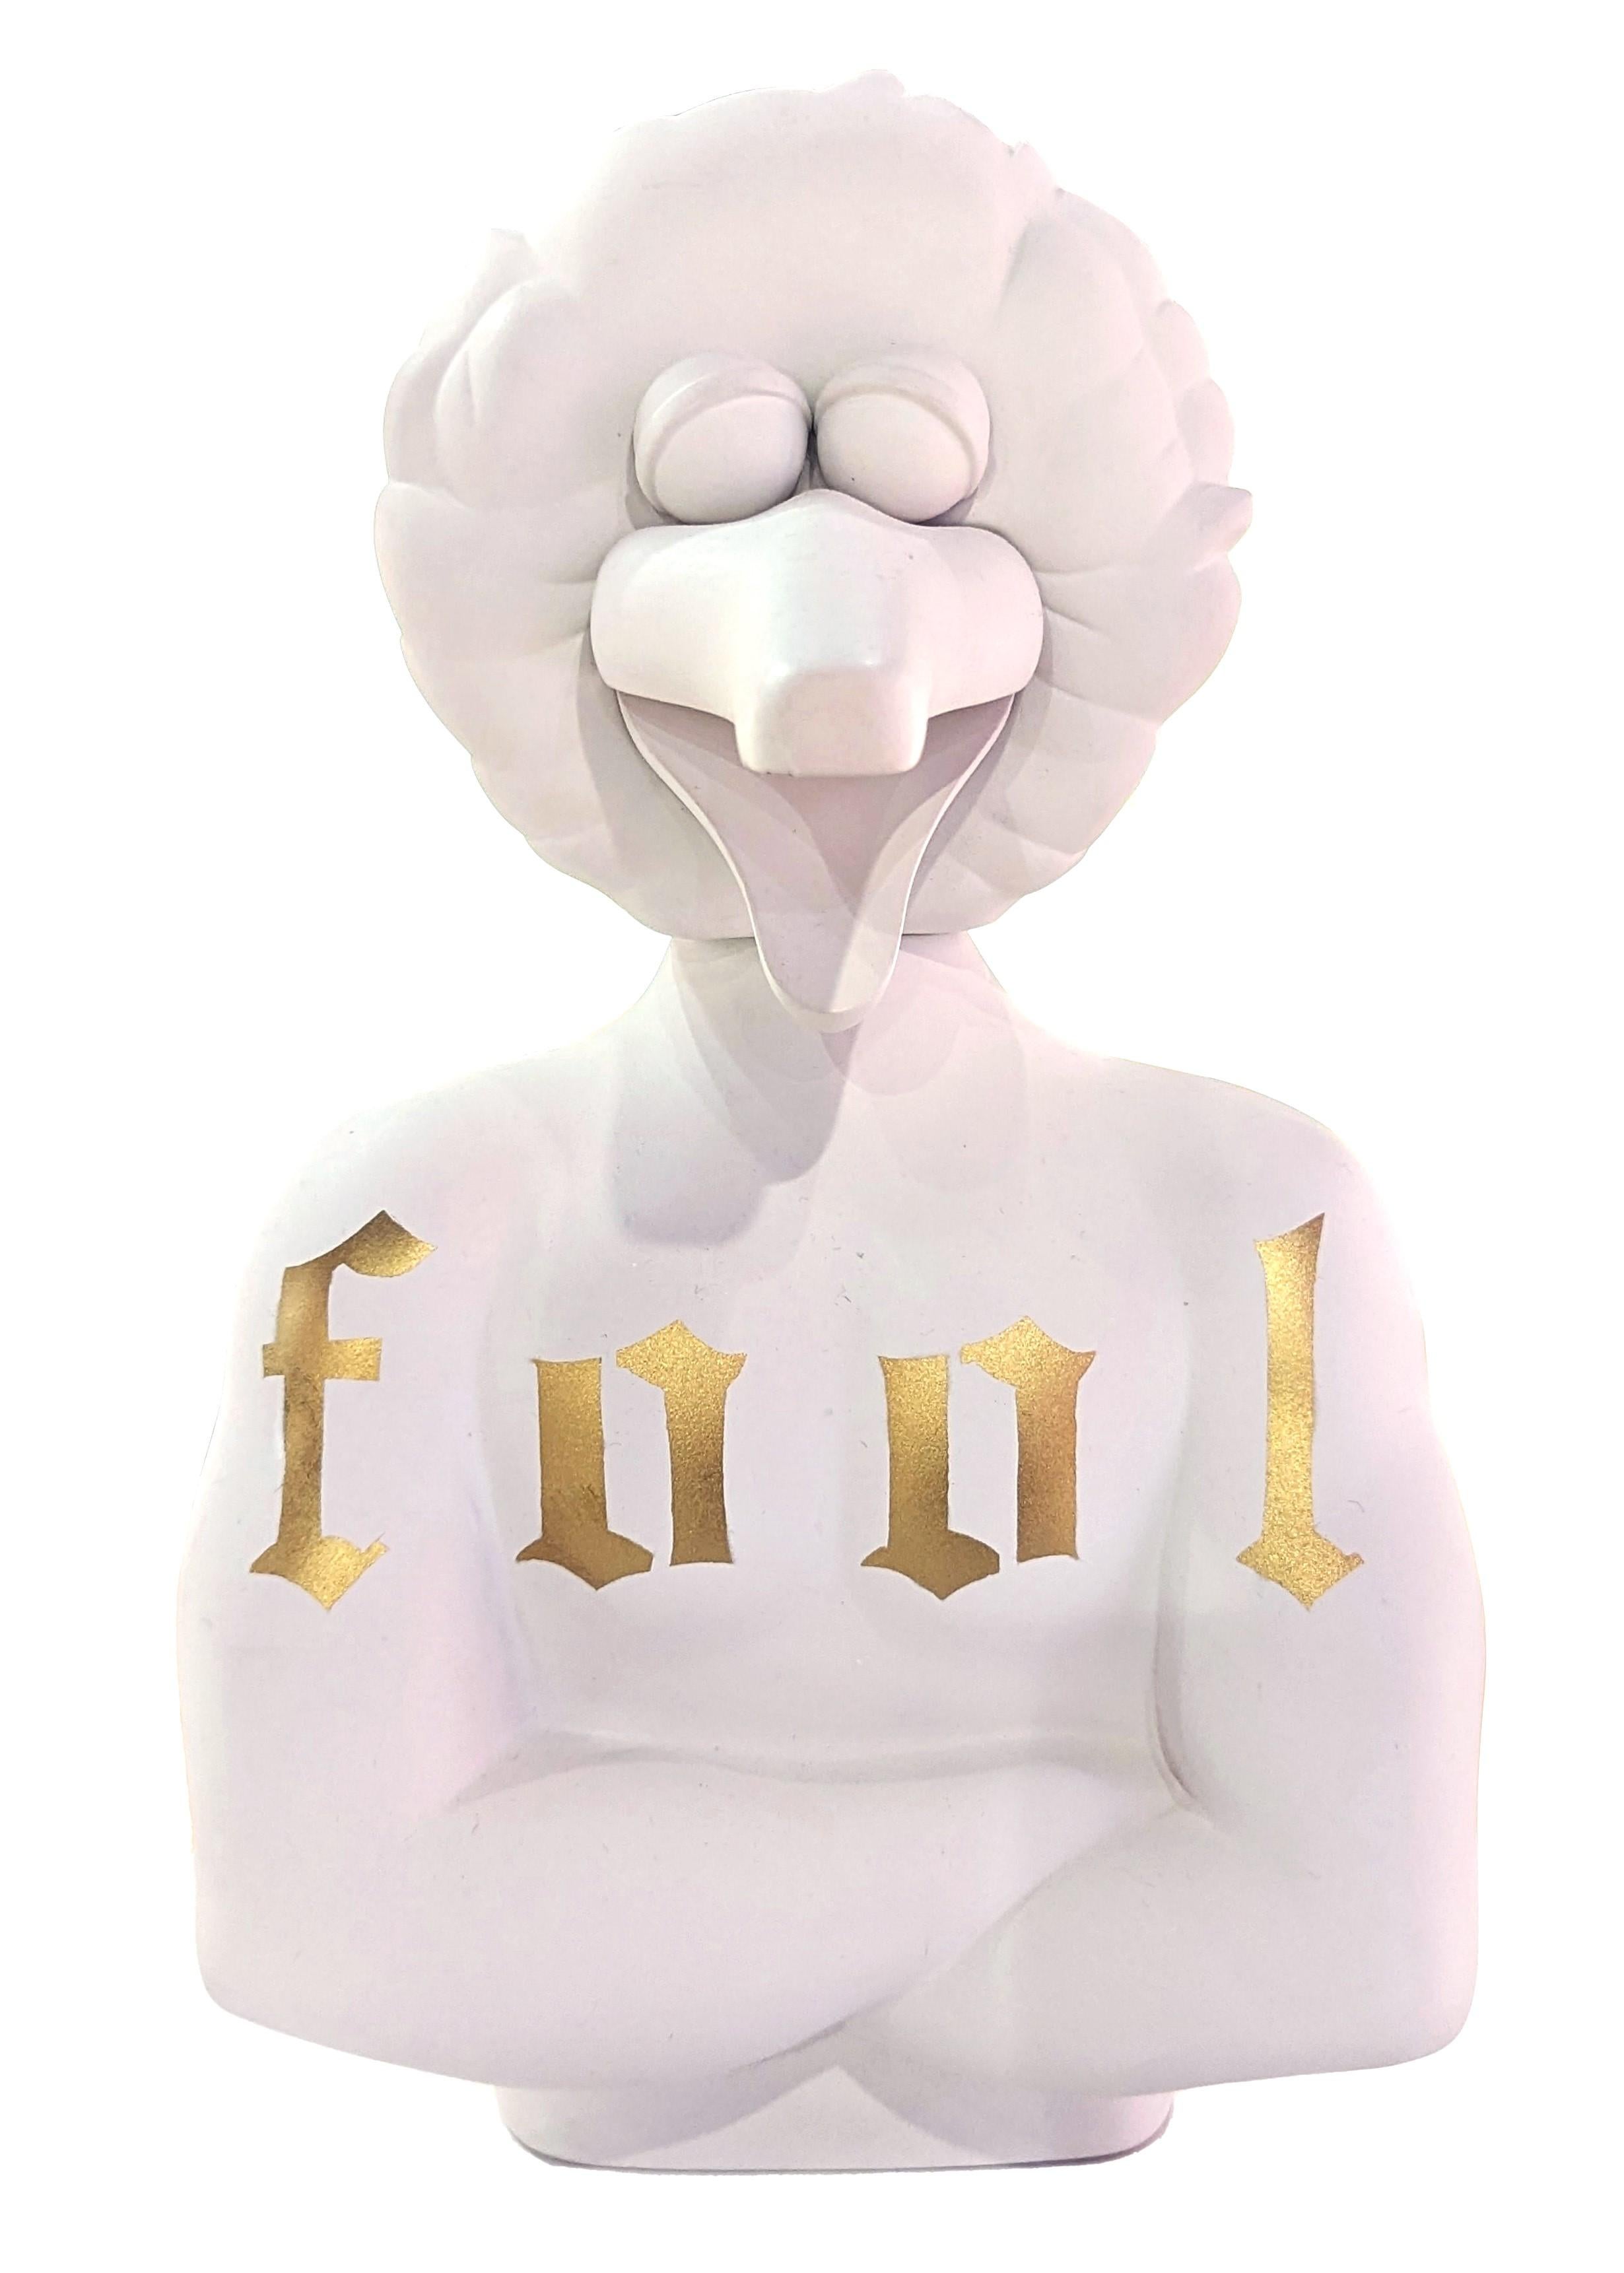 Figurative Sculpture Pablo Garcia - Big Bad Bird Contemporary Resin Pop Culture Sesame Street Character Sculpture